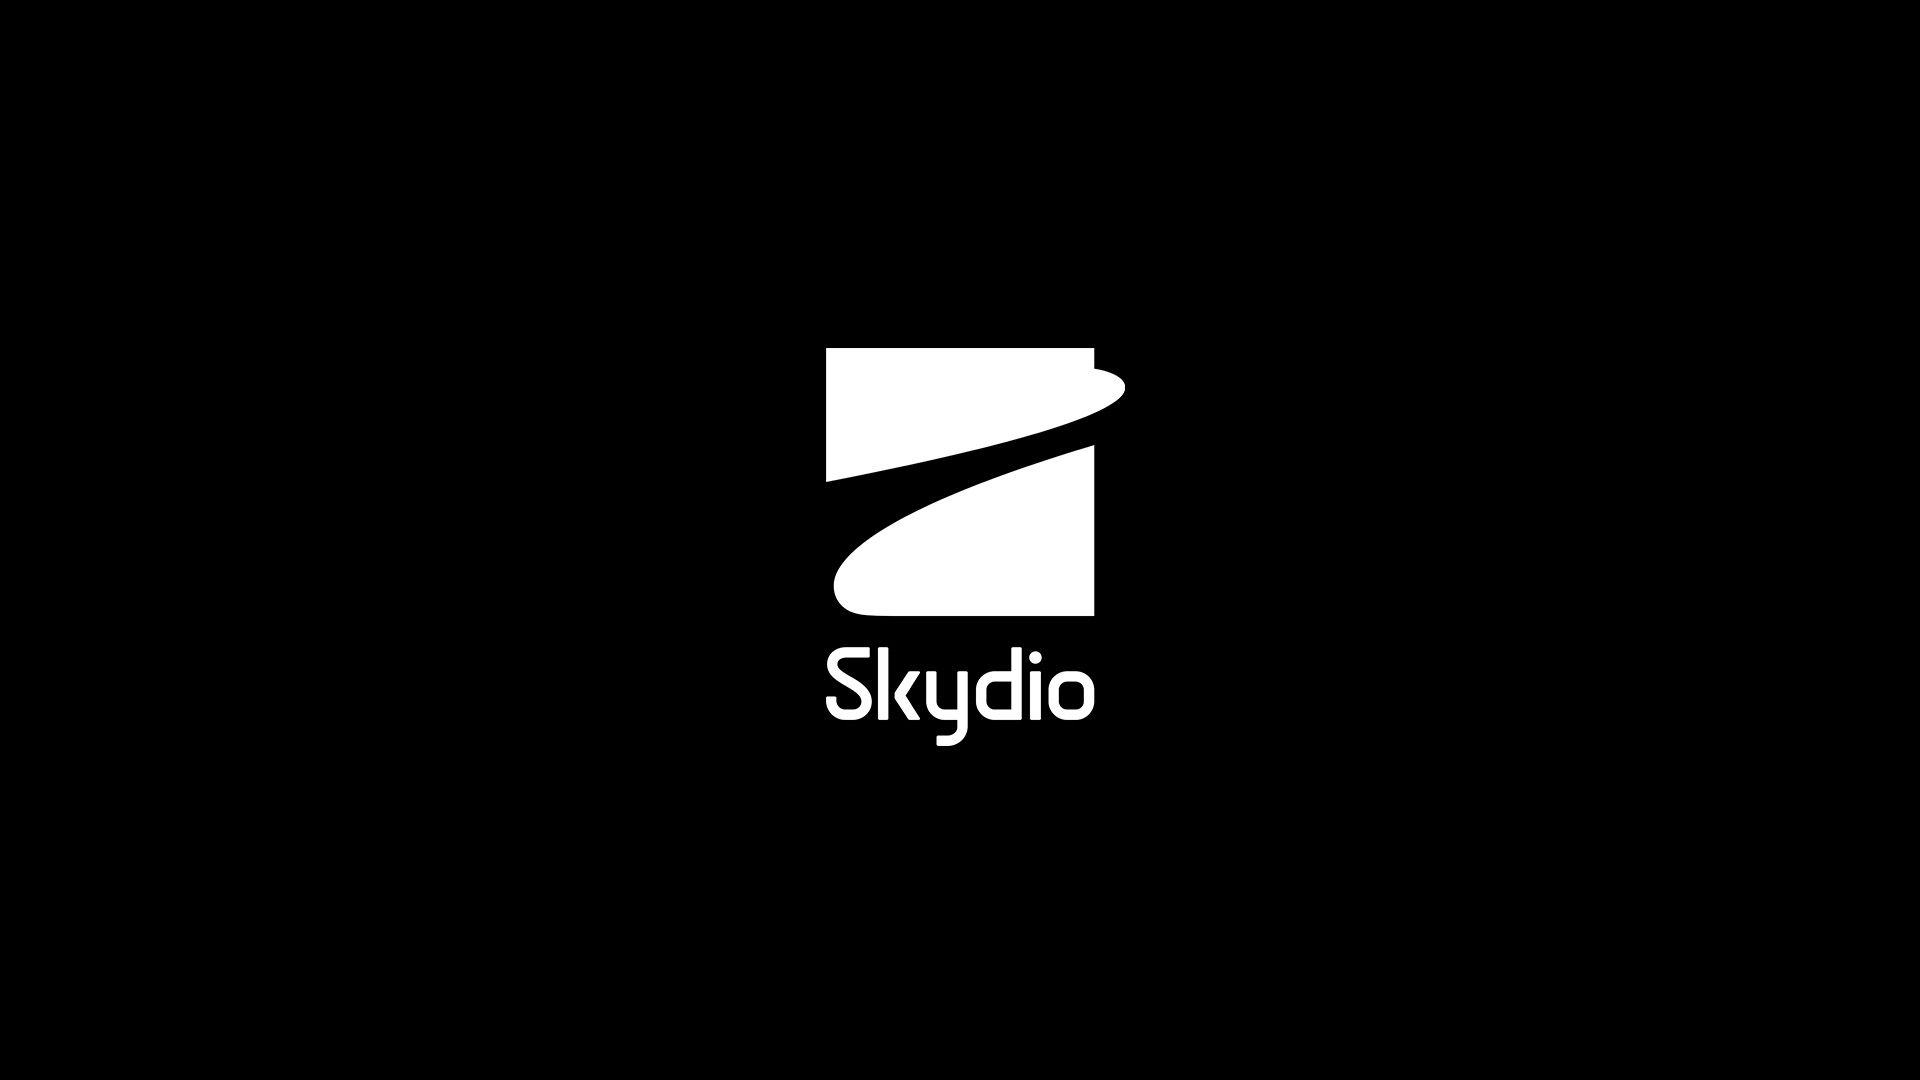 www.skydio.com